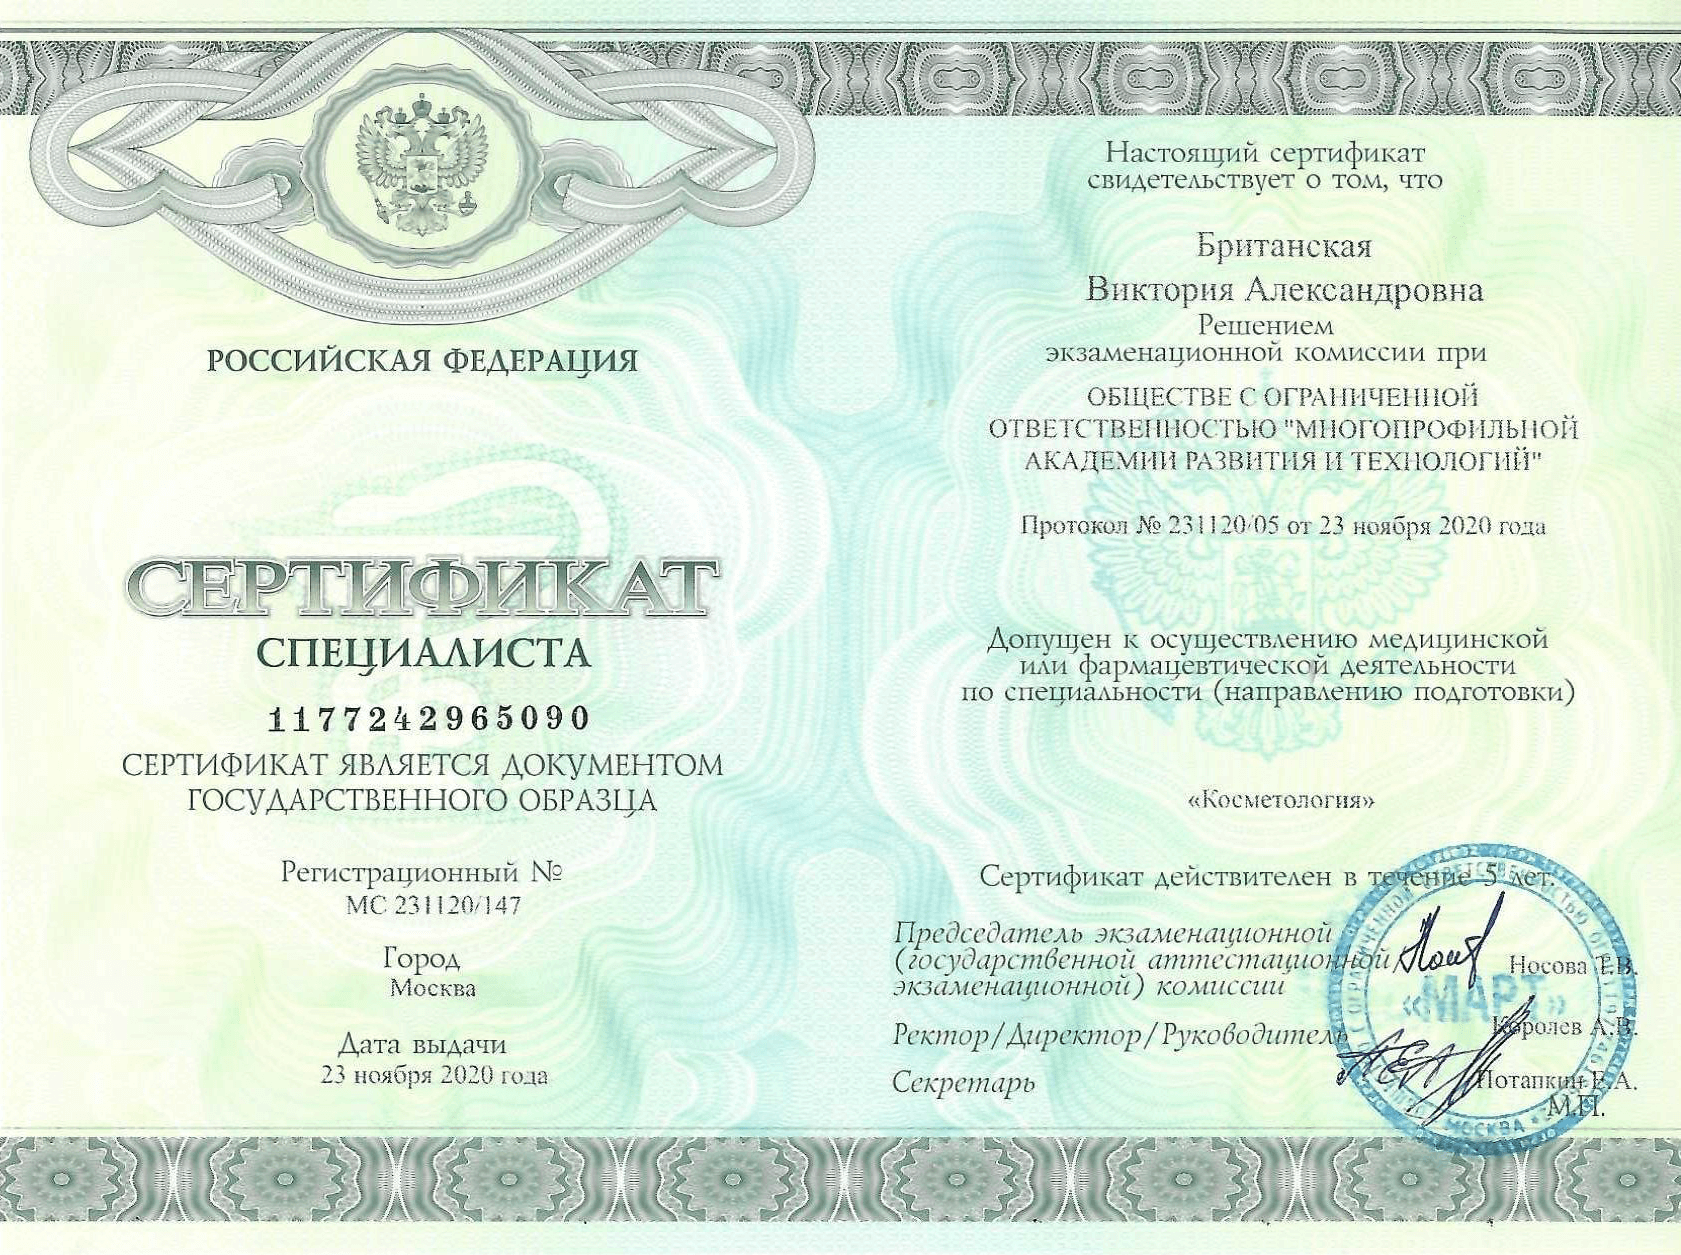 Сертификат врача Британская Виктория Александровна фото 3